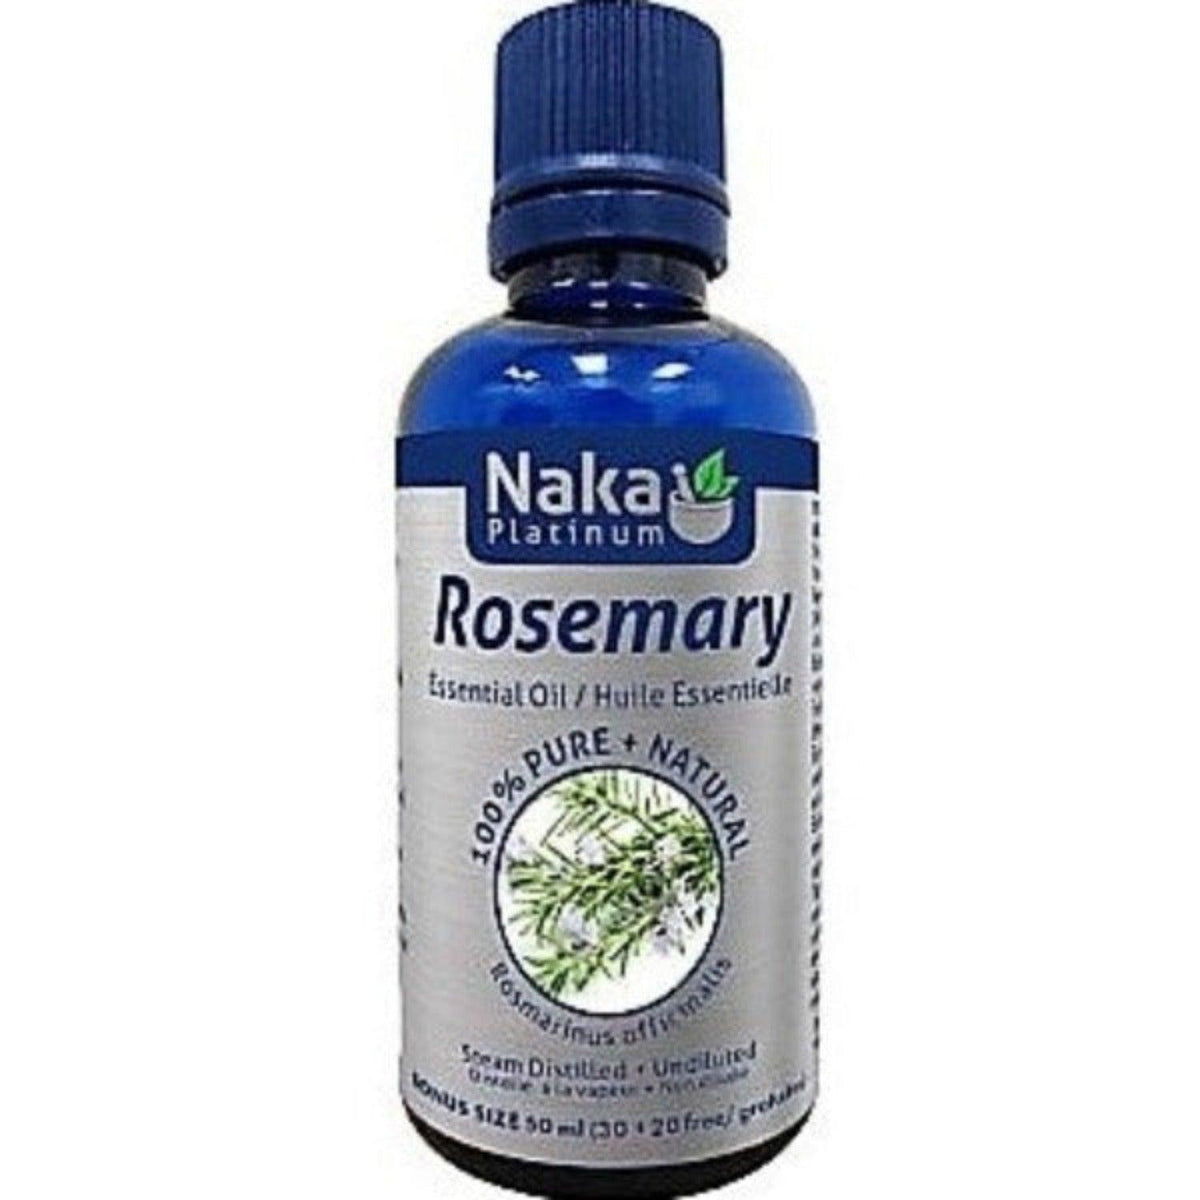 Naka Platinum Rosemary Essential Oil 50ml Essential Oils at Village Vitamin Store